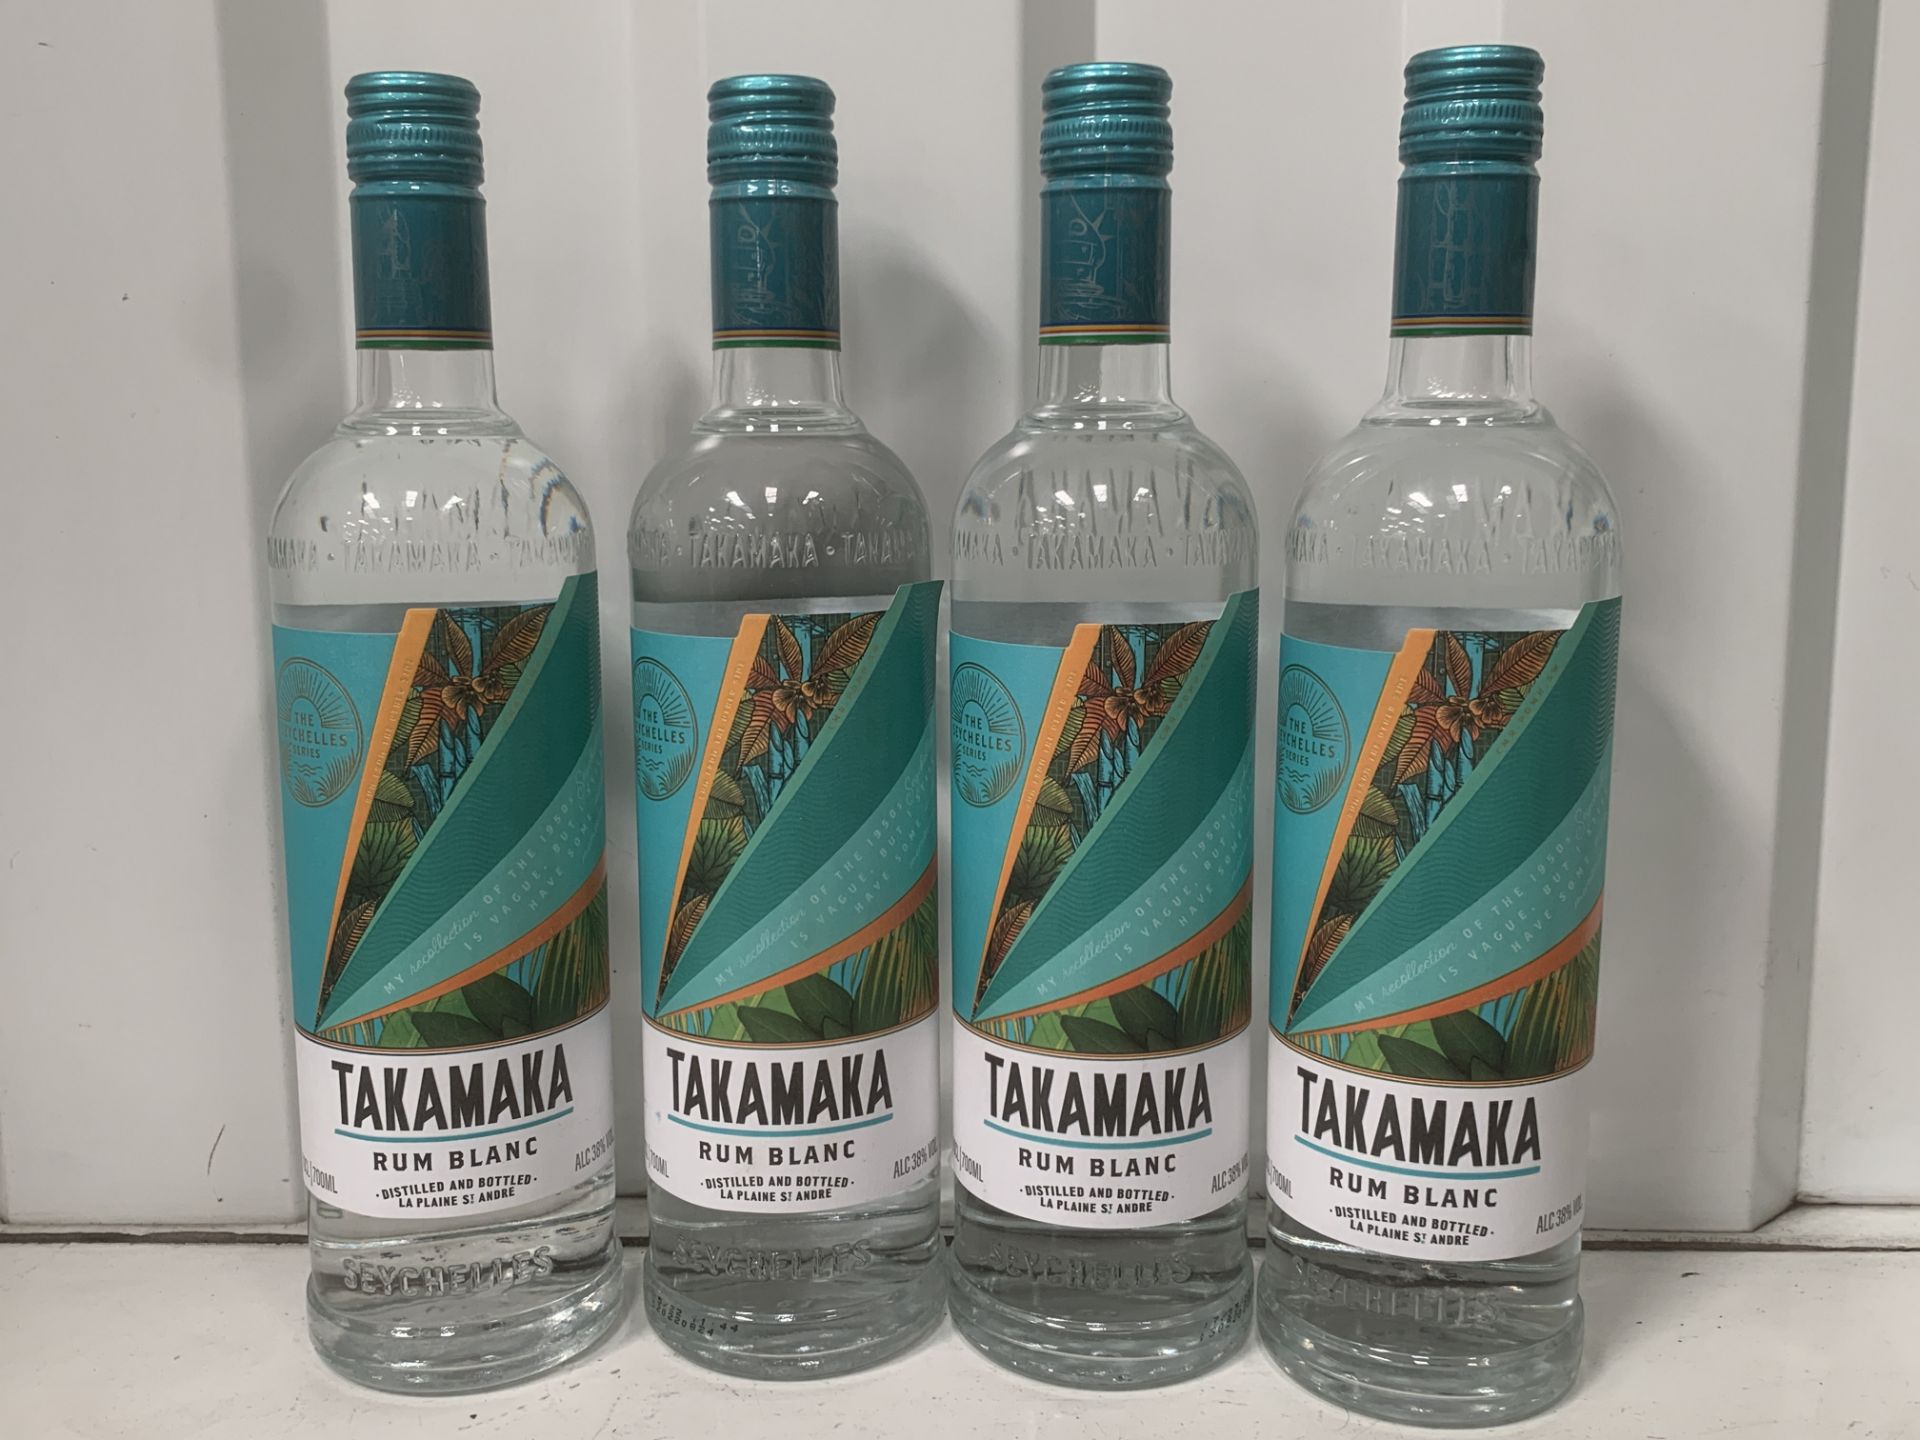 4x Bottles of Takamaka Rum Blanc 38%, 70cl